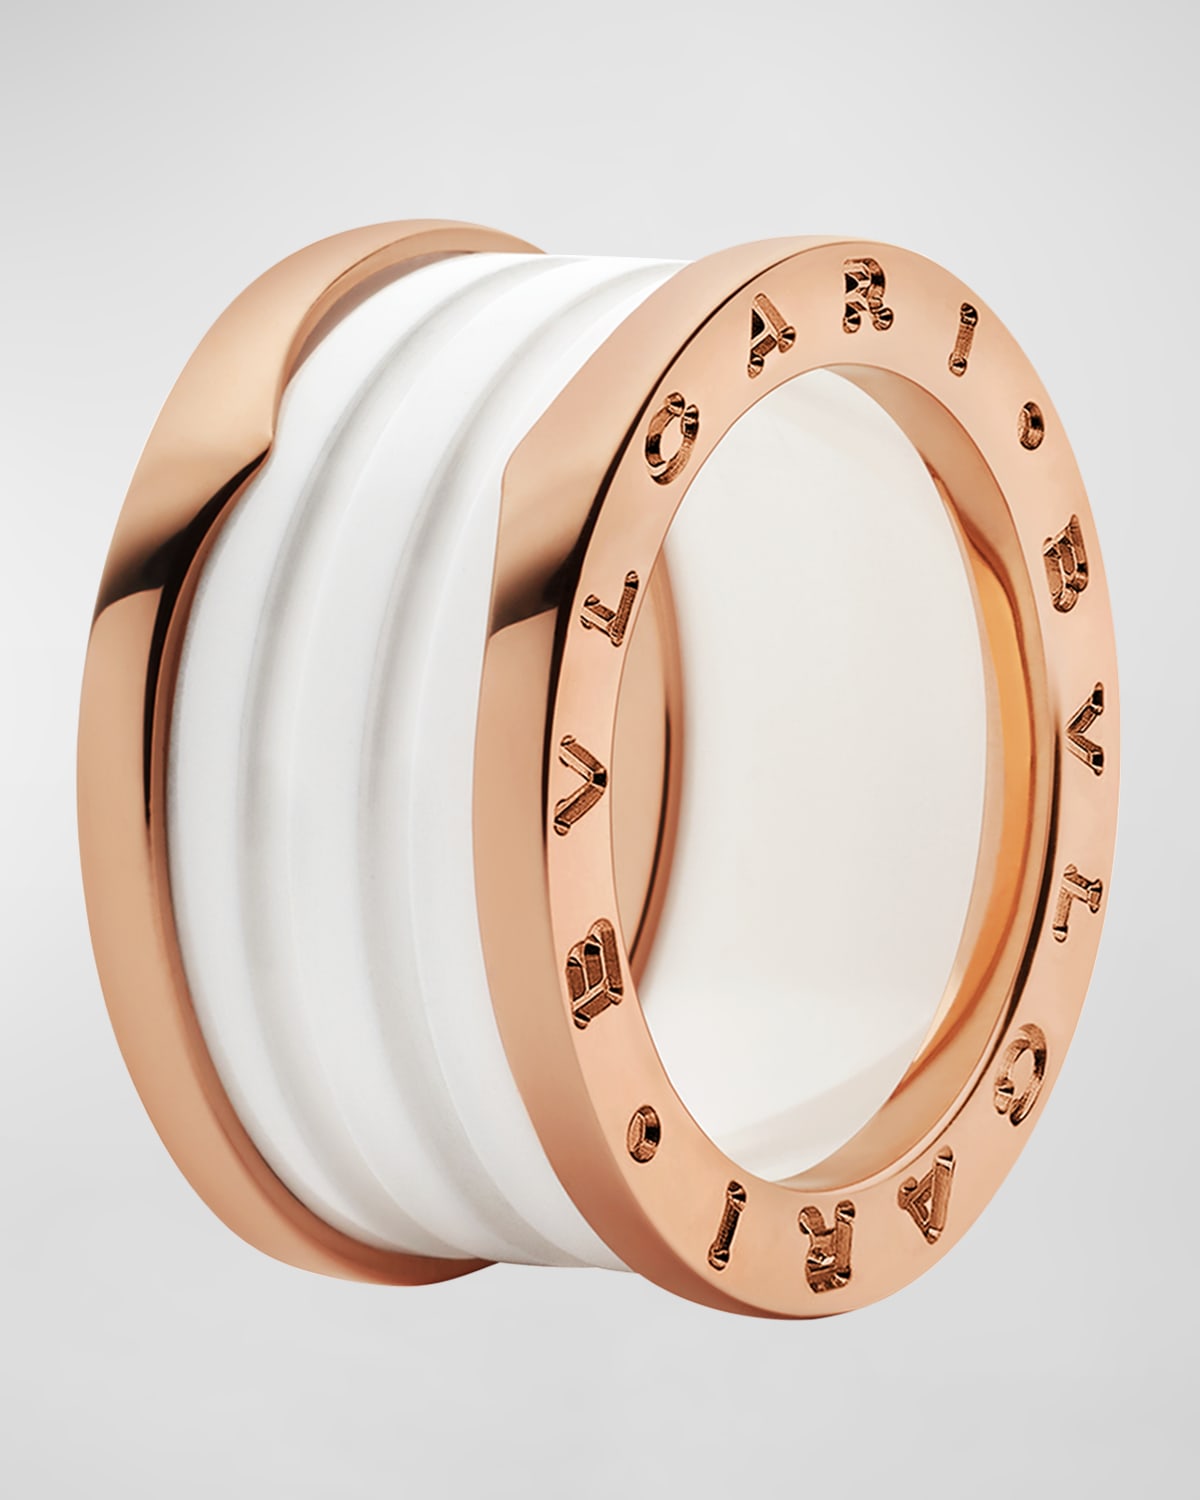 B.Zero1 Pink Gold White Ceramic Ring, Size 54